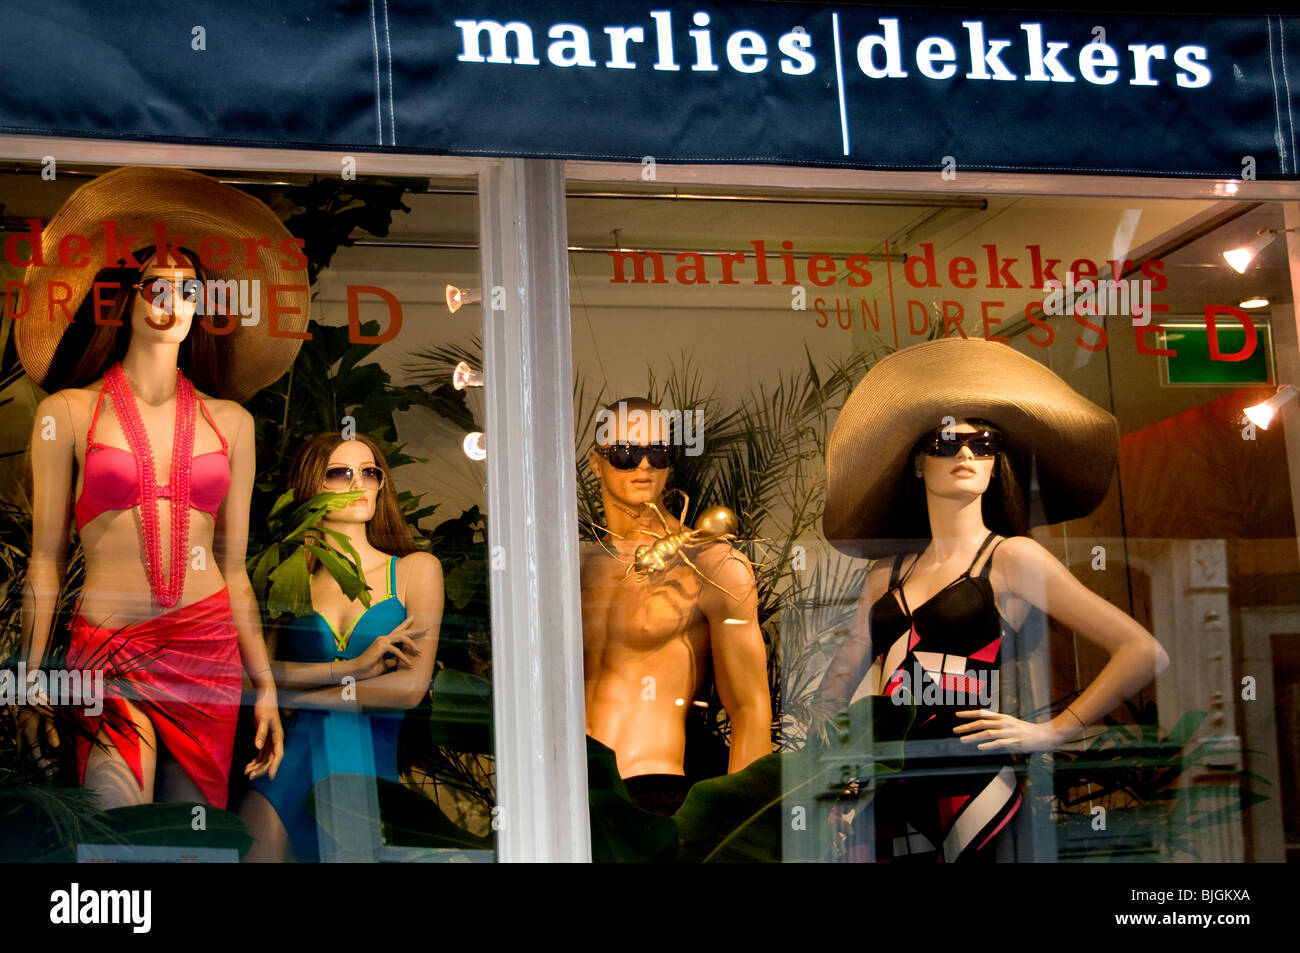 Marlies Dekkers Amsterdam Jordaan fashionable designer fashion clothes shop  clothing store Stock Photo - Alamy